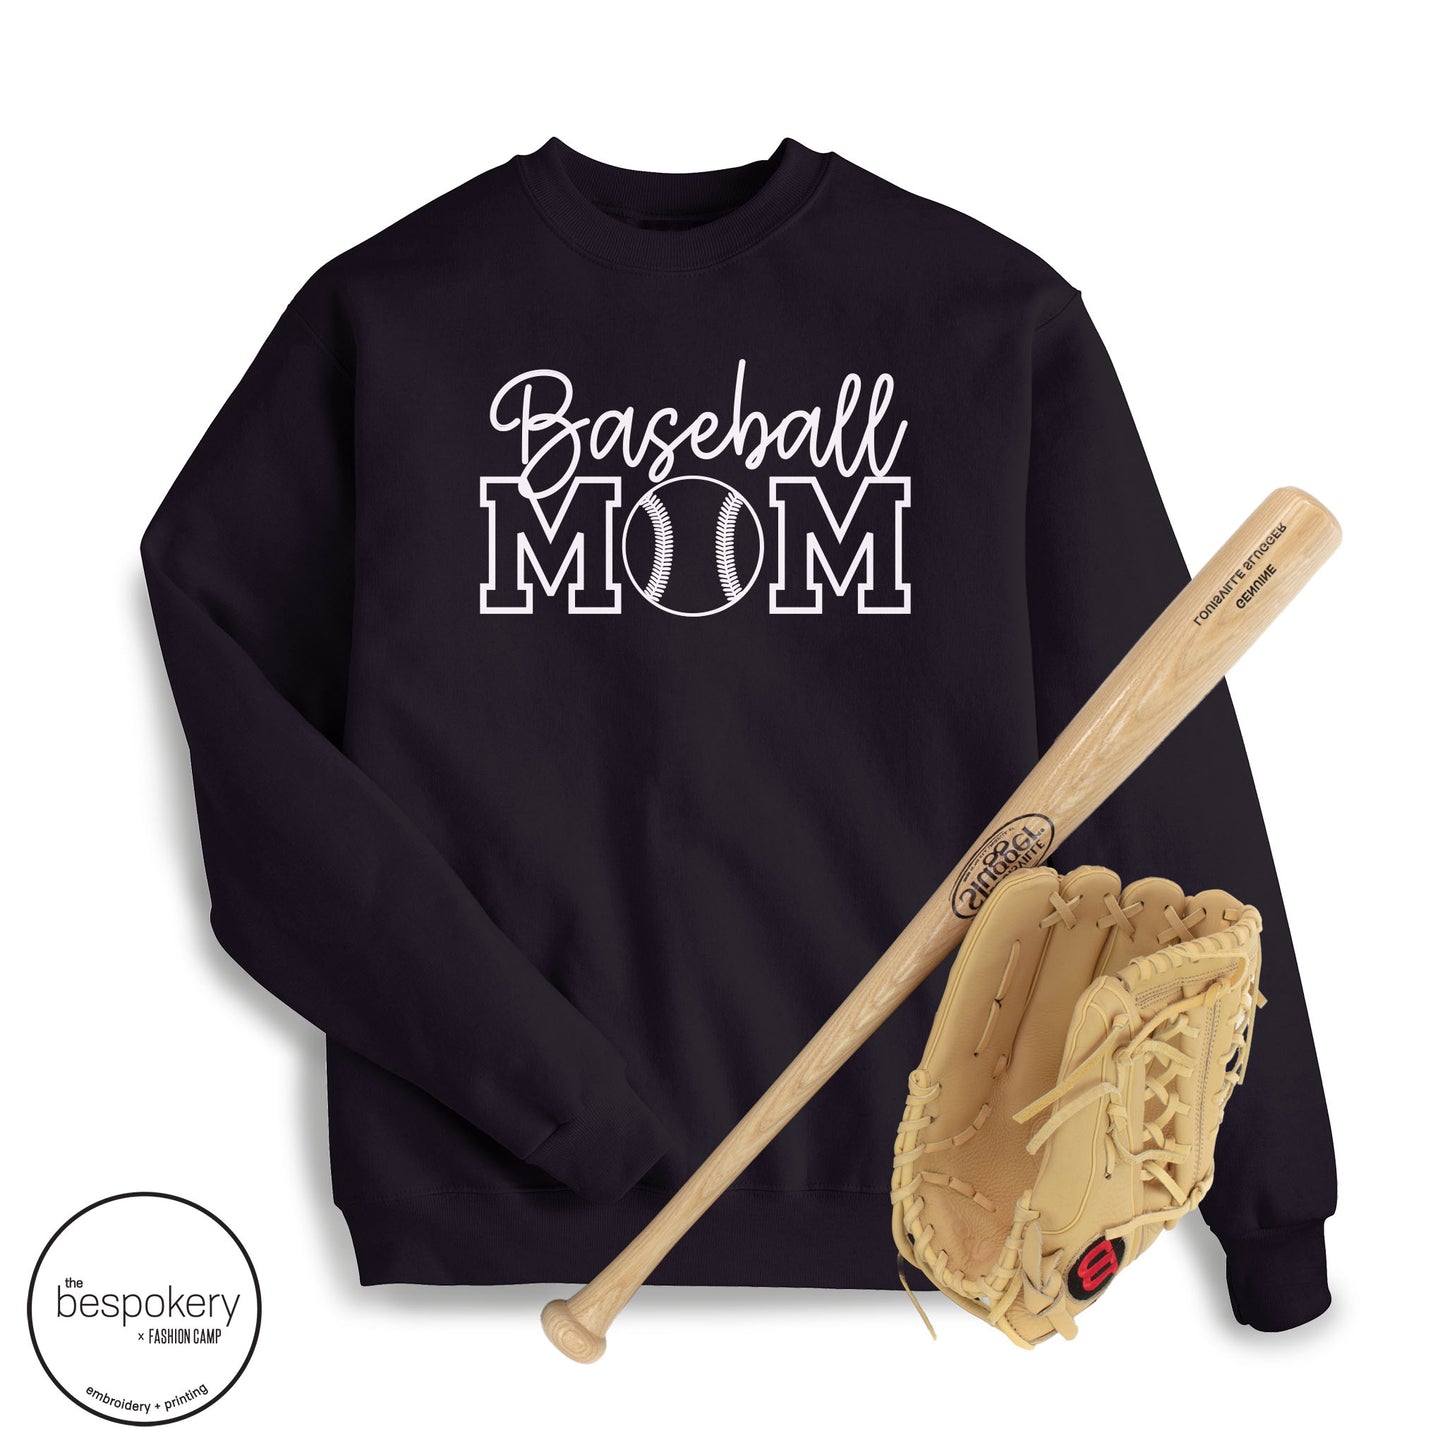 "Baseball MOM" Black Sweatshirt - (Adult Only)